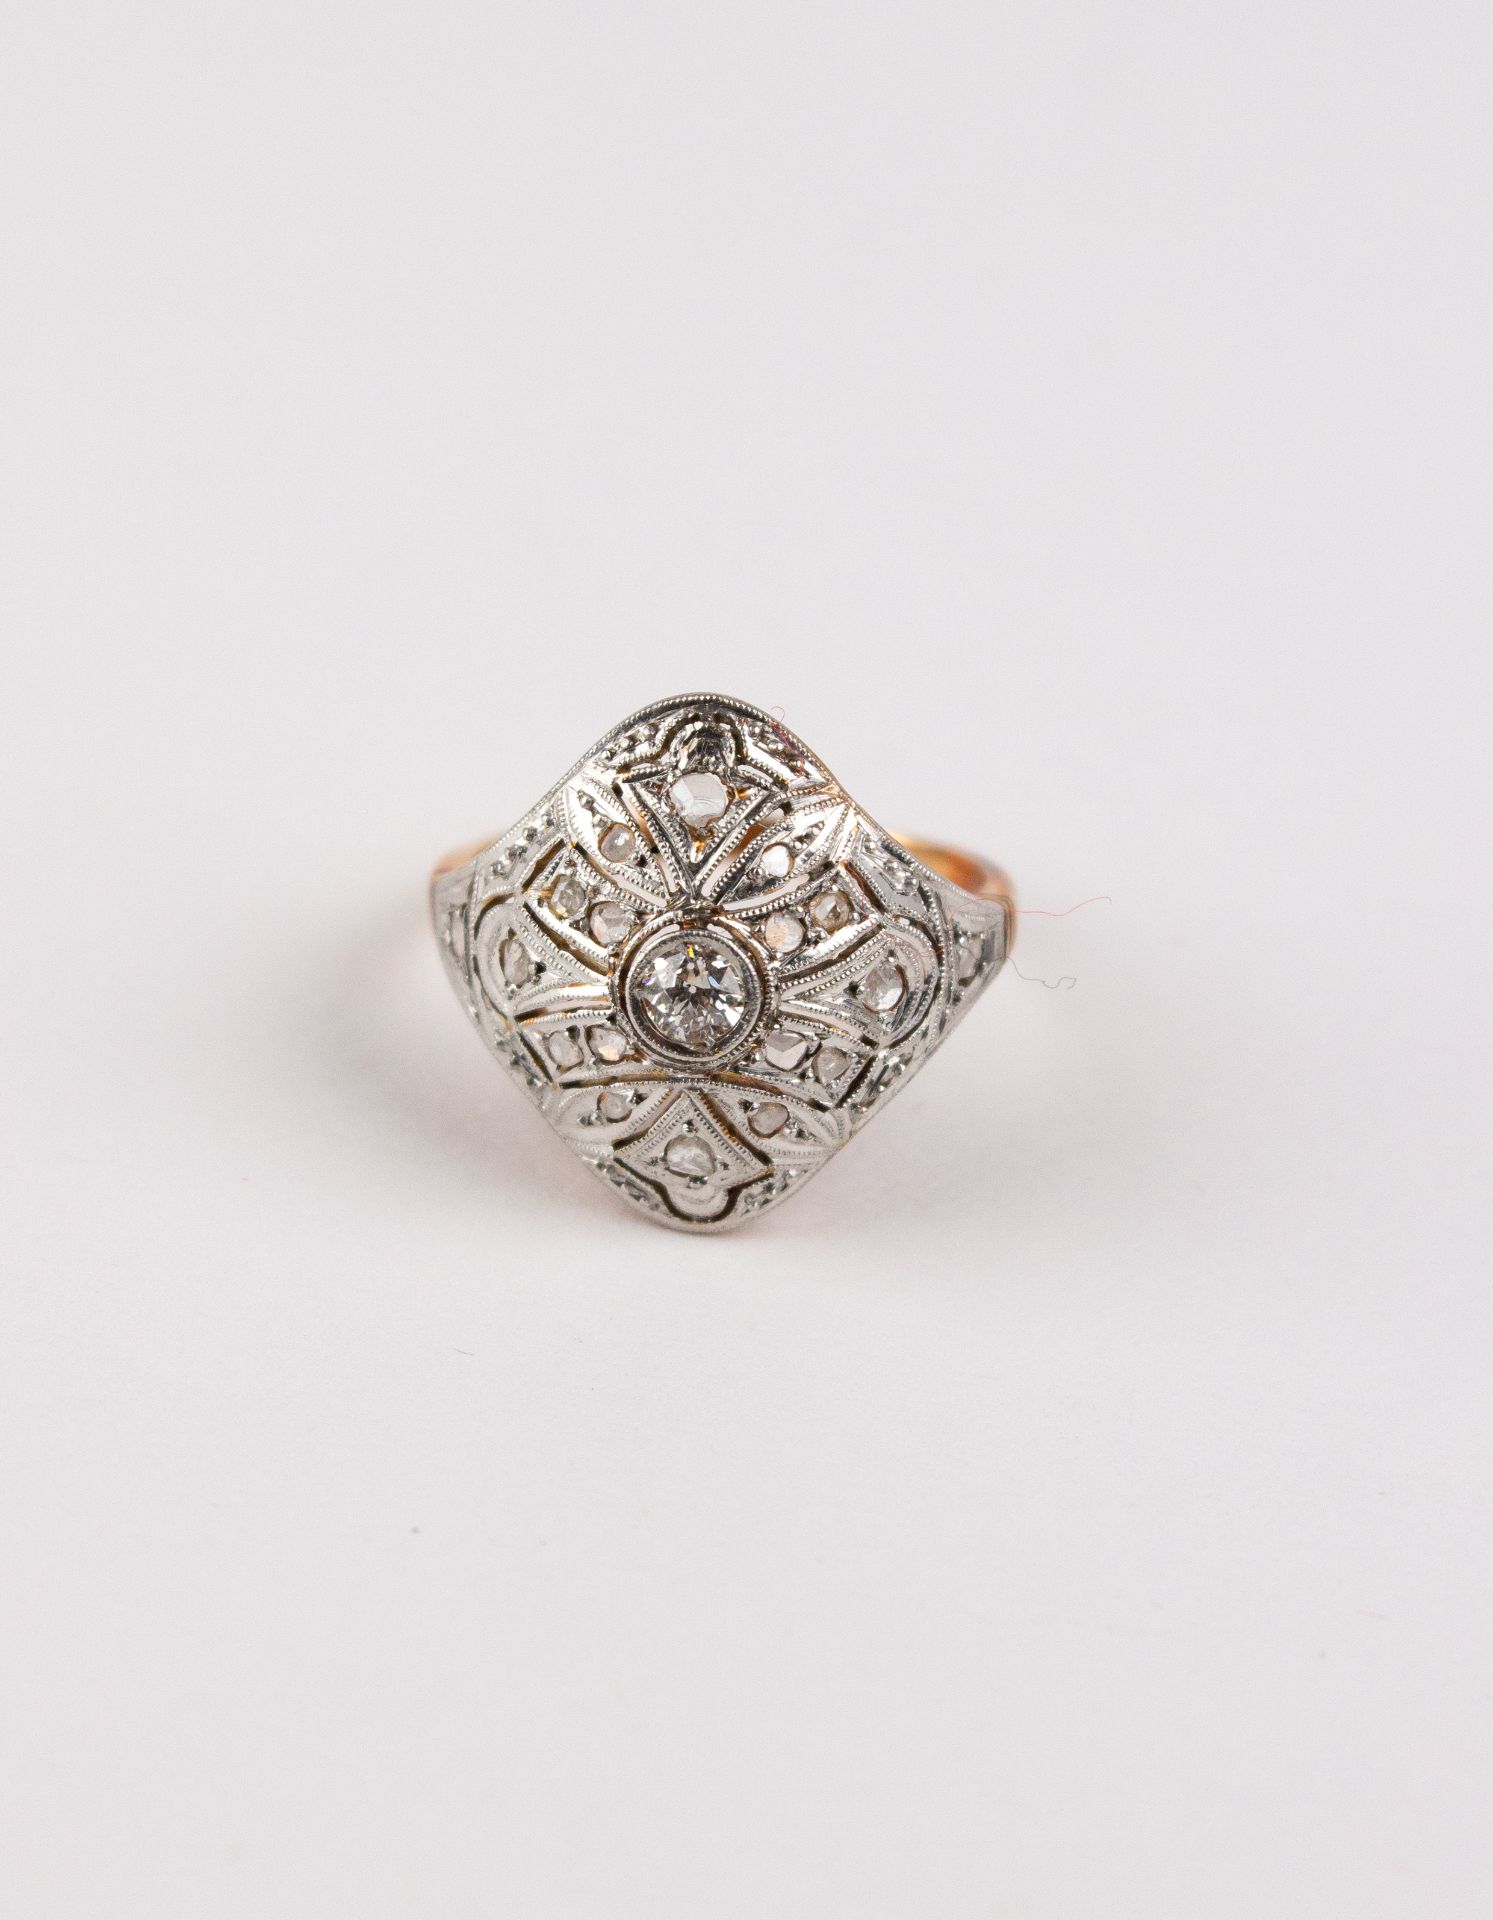 An Art-Déco ring circa 1930. Gold, platinum and diamonds